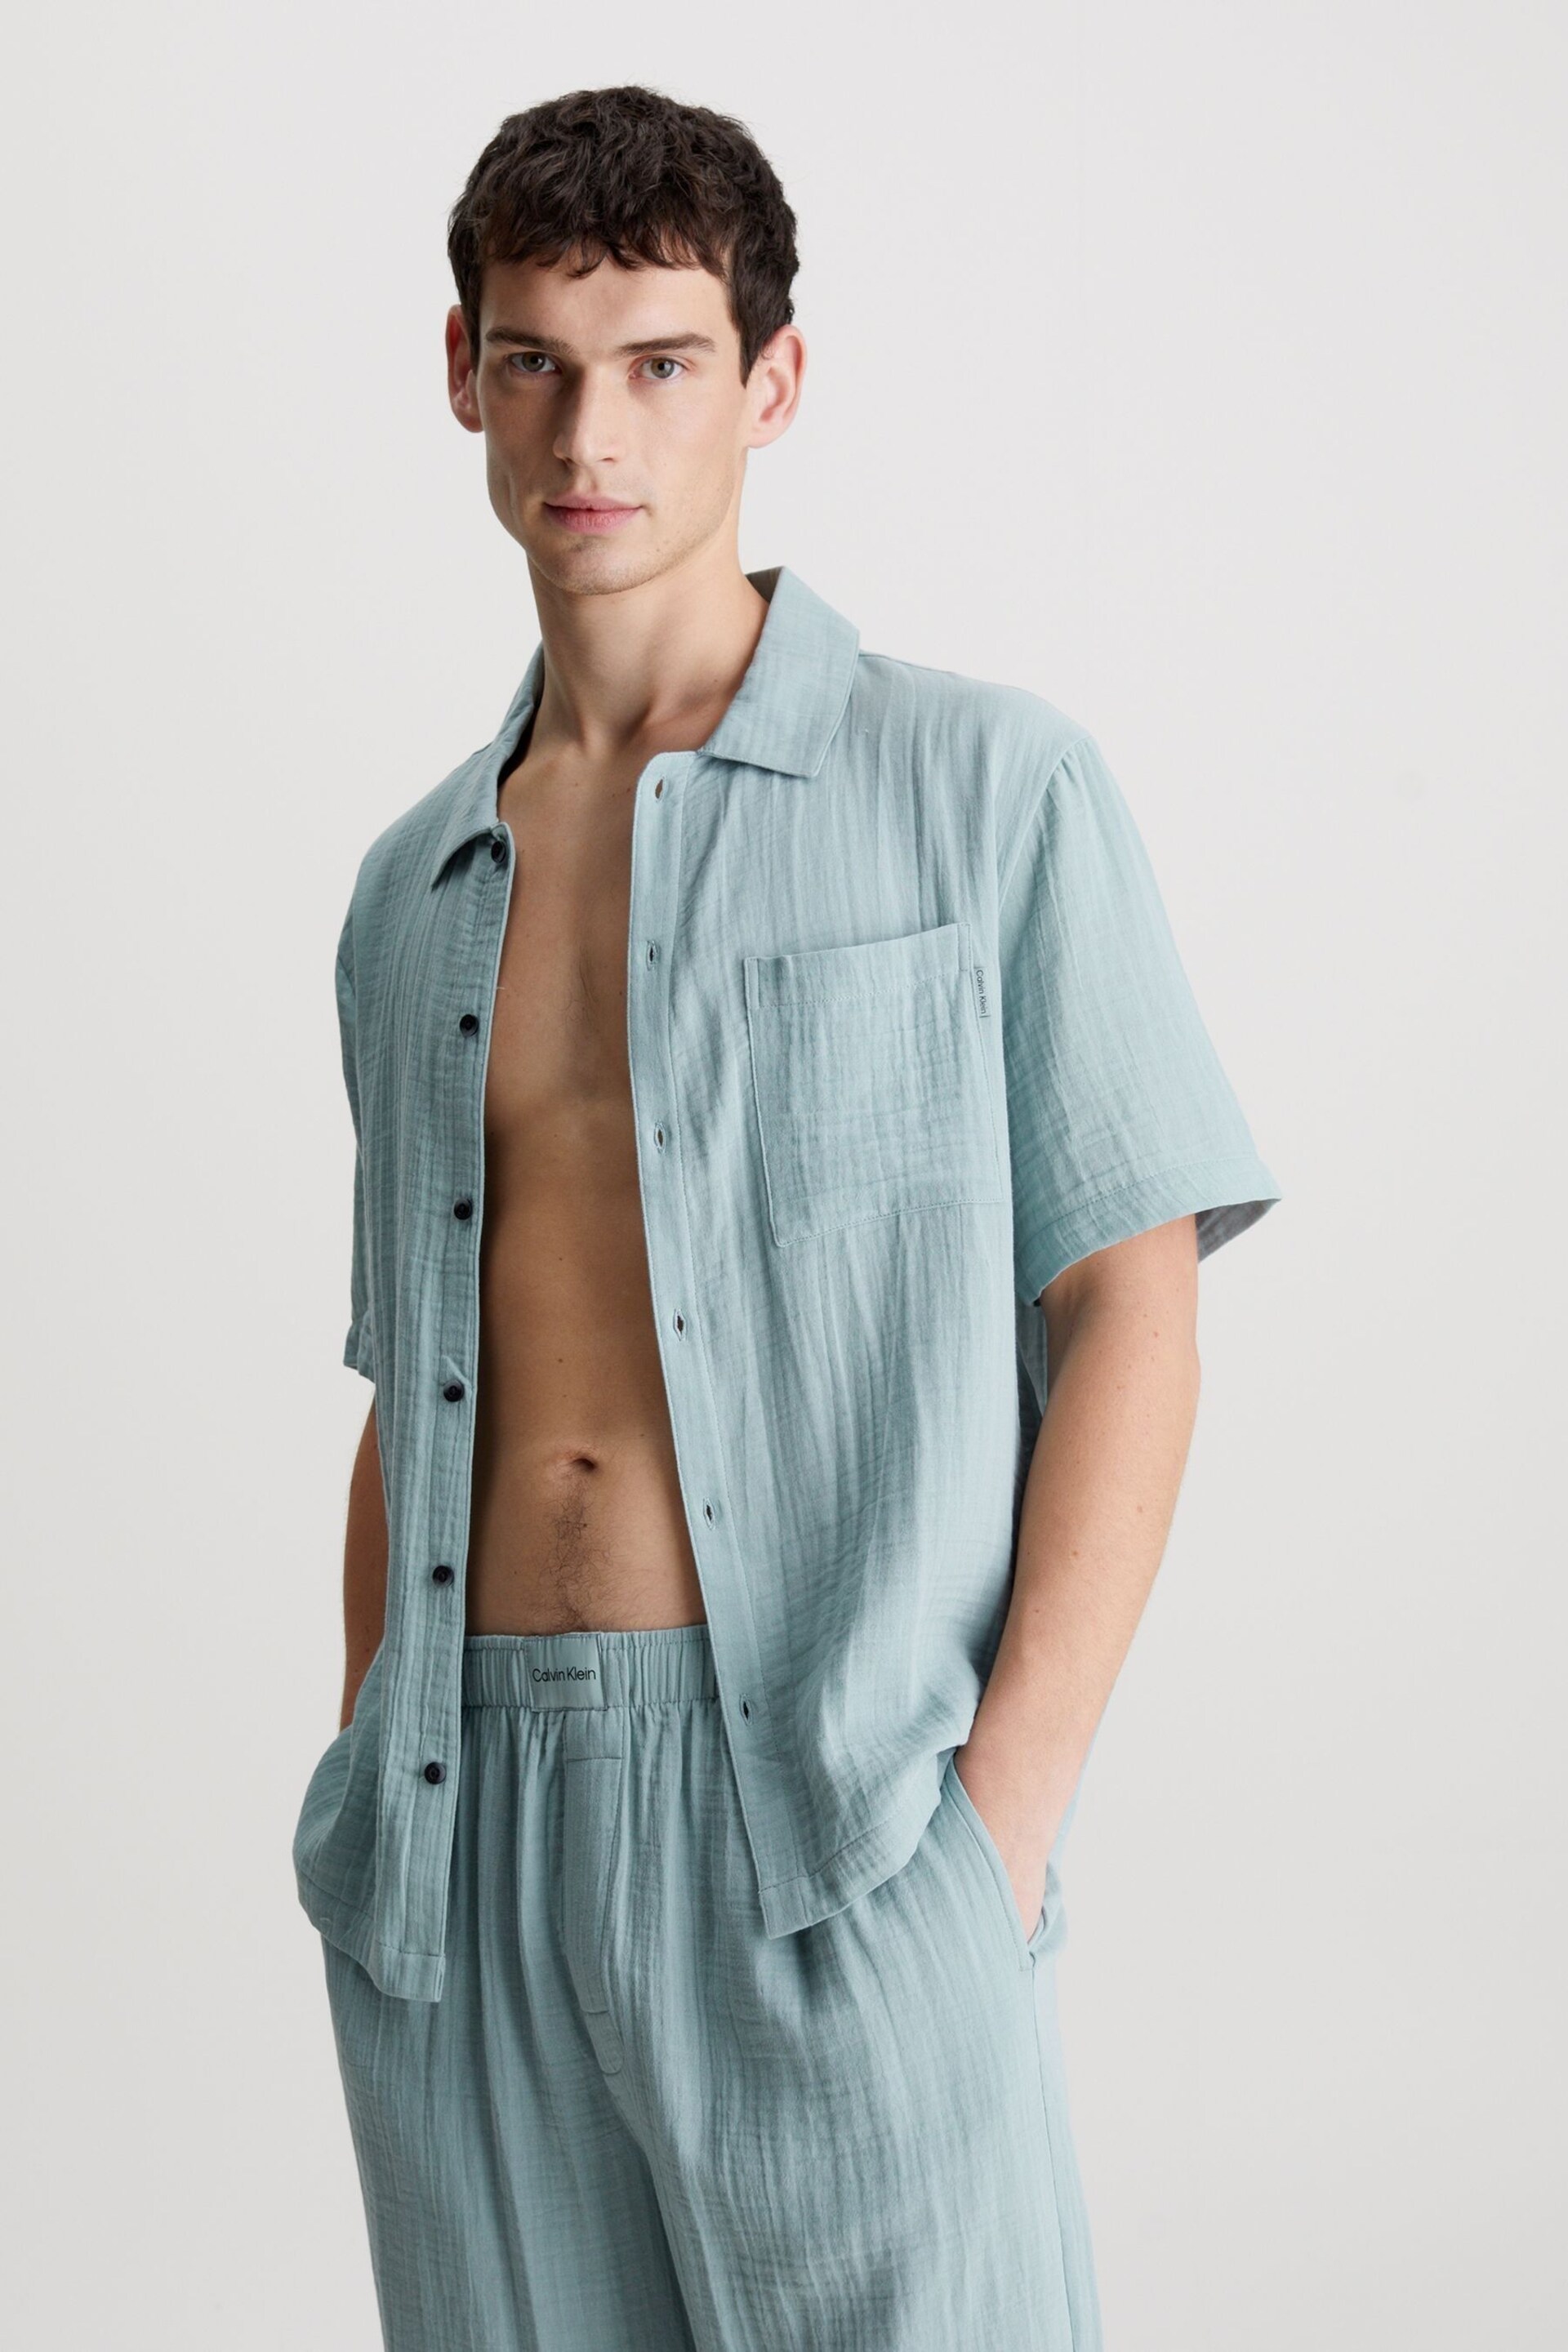 Calvin Klein Blue Plain Button Down Shirt - Image 1 of 4